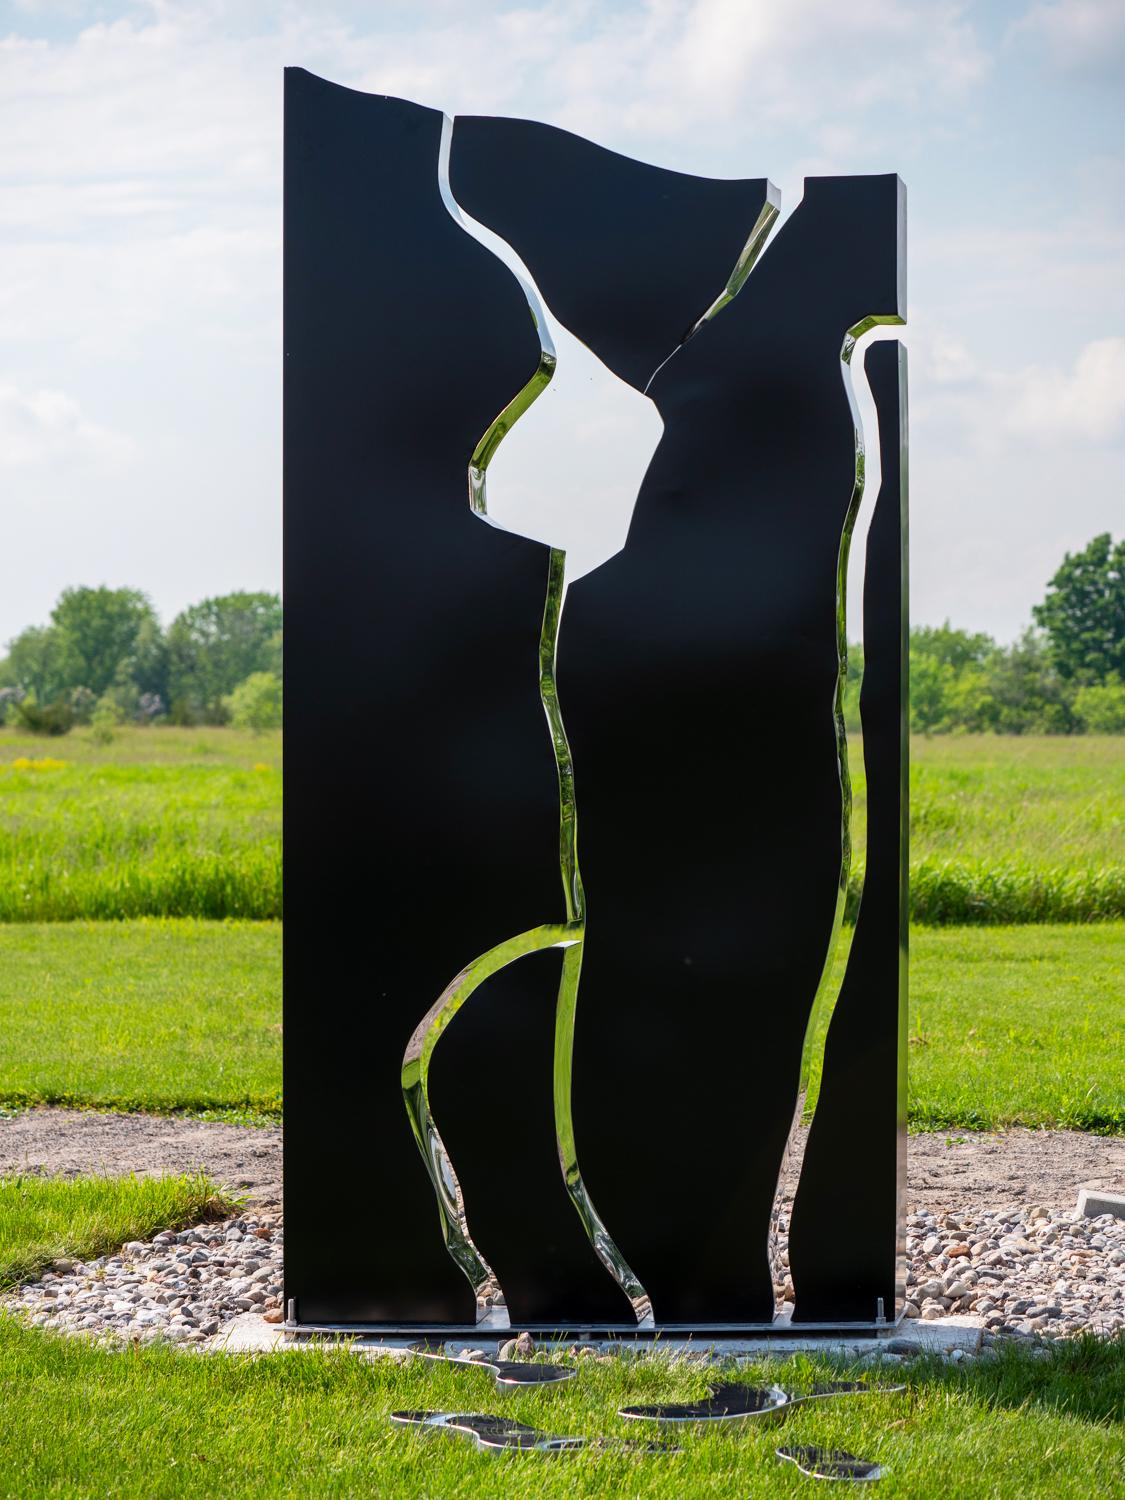 Water Writing V3 - tall, black, geometric, modern, outdoor steel sculpture